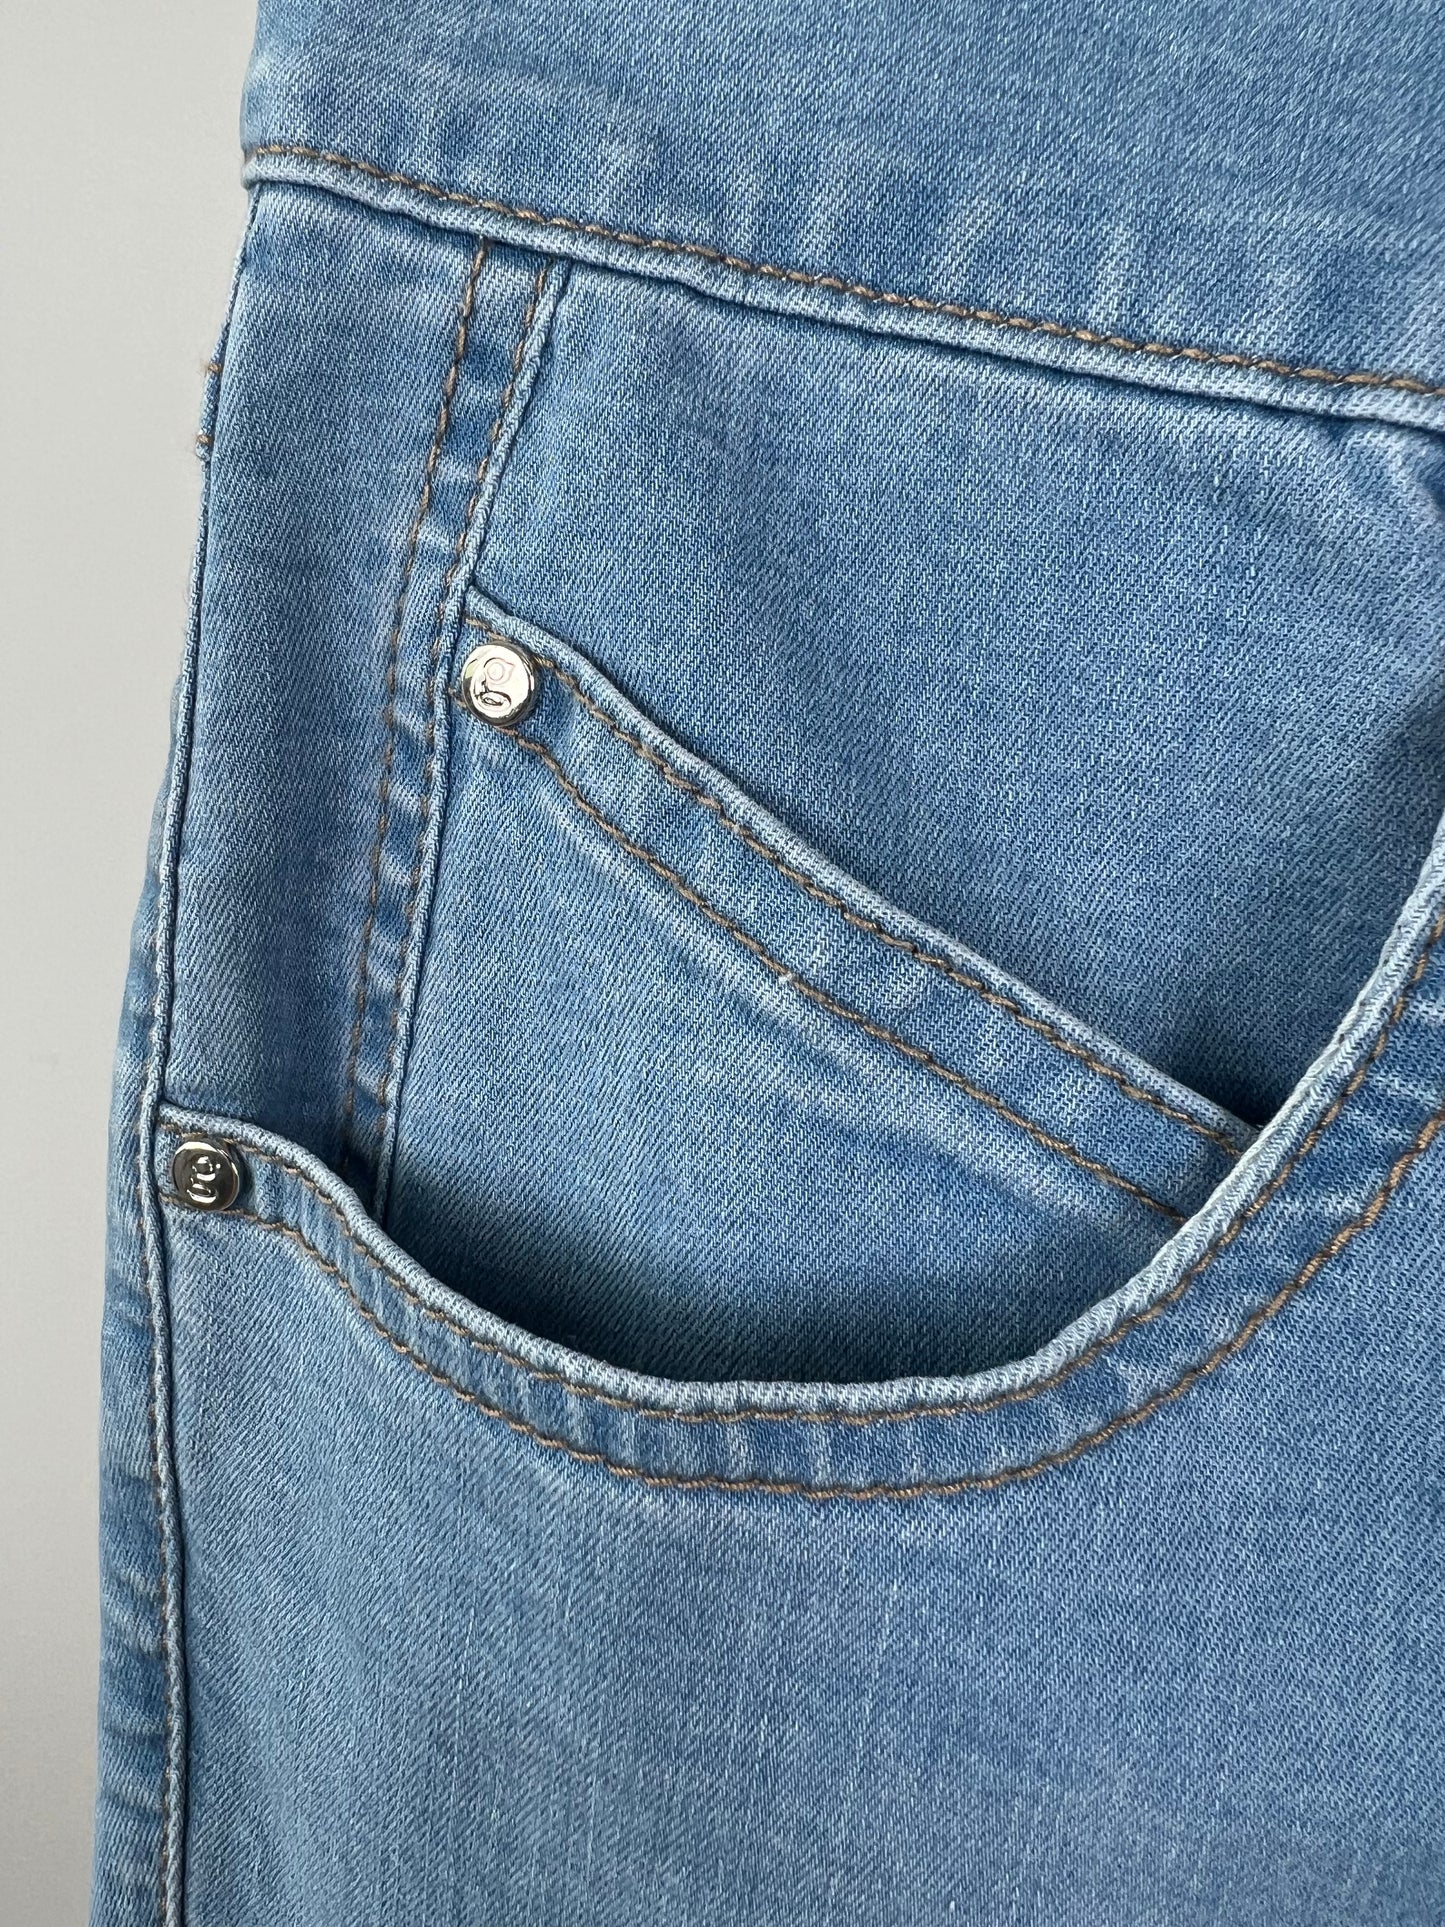 Pantalon corsaire en denim bleu (8)